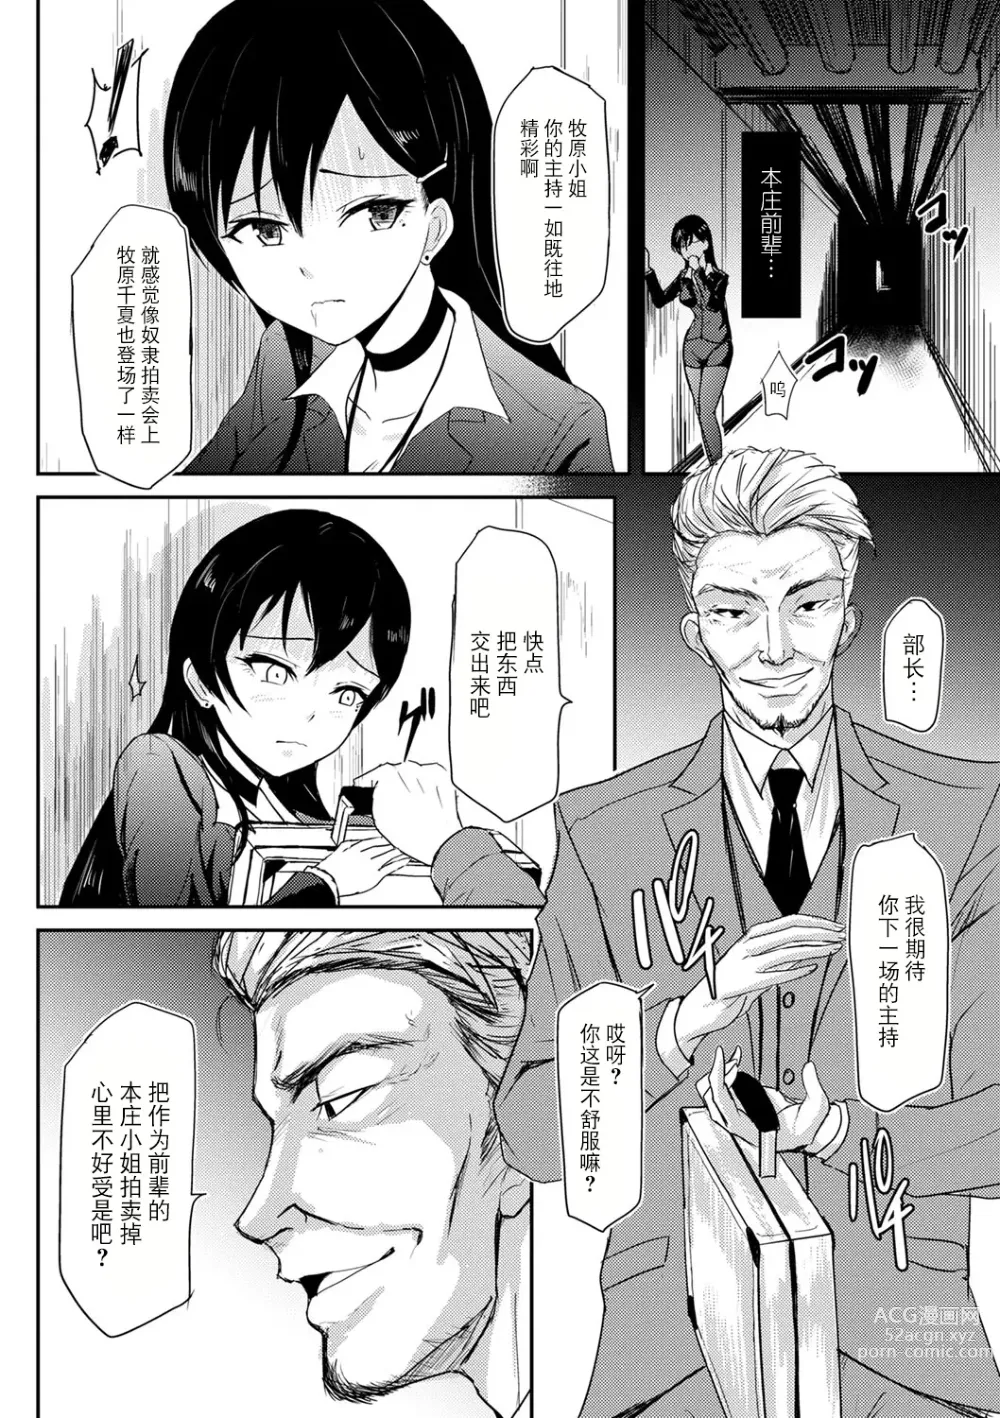 Page 2 of manga Slave Presentation